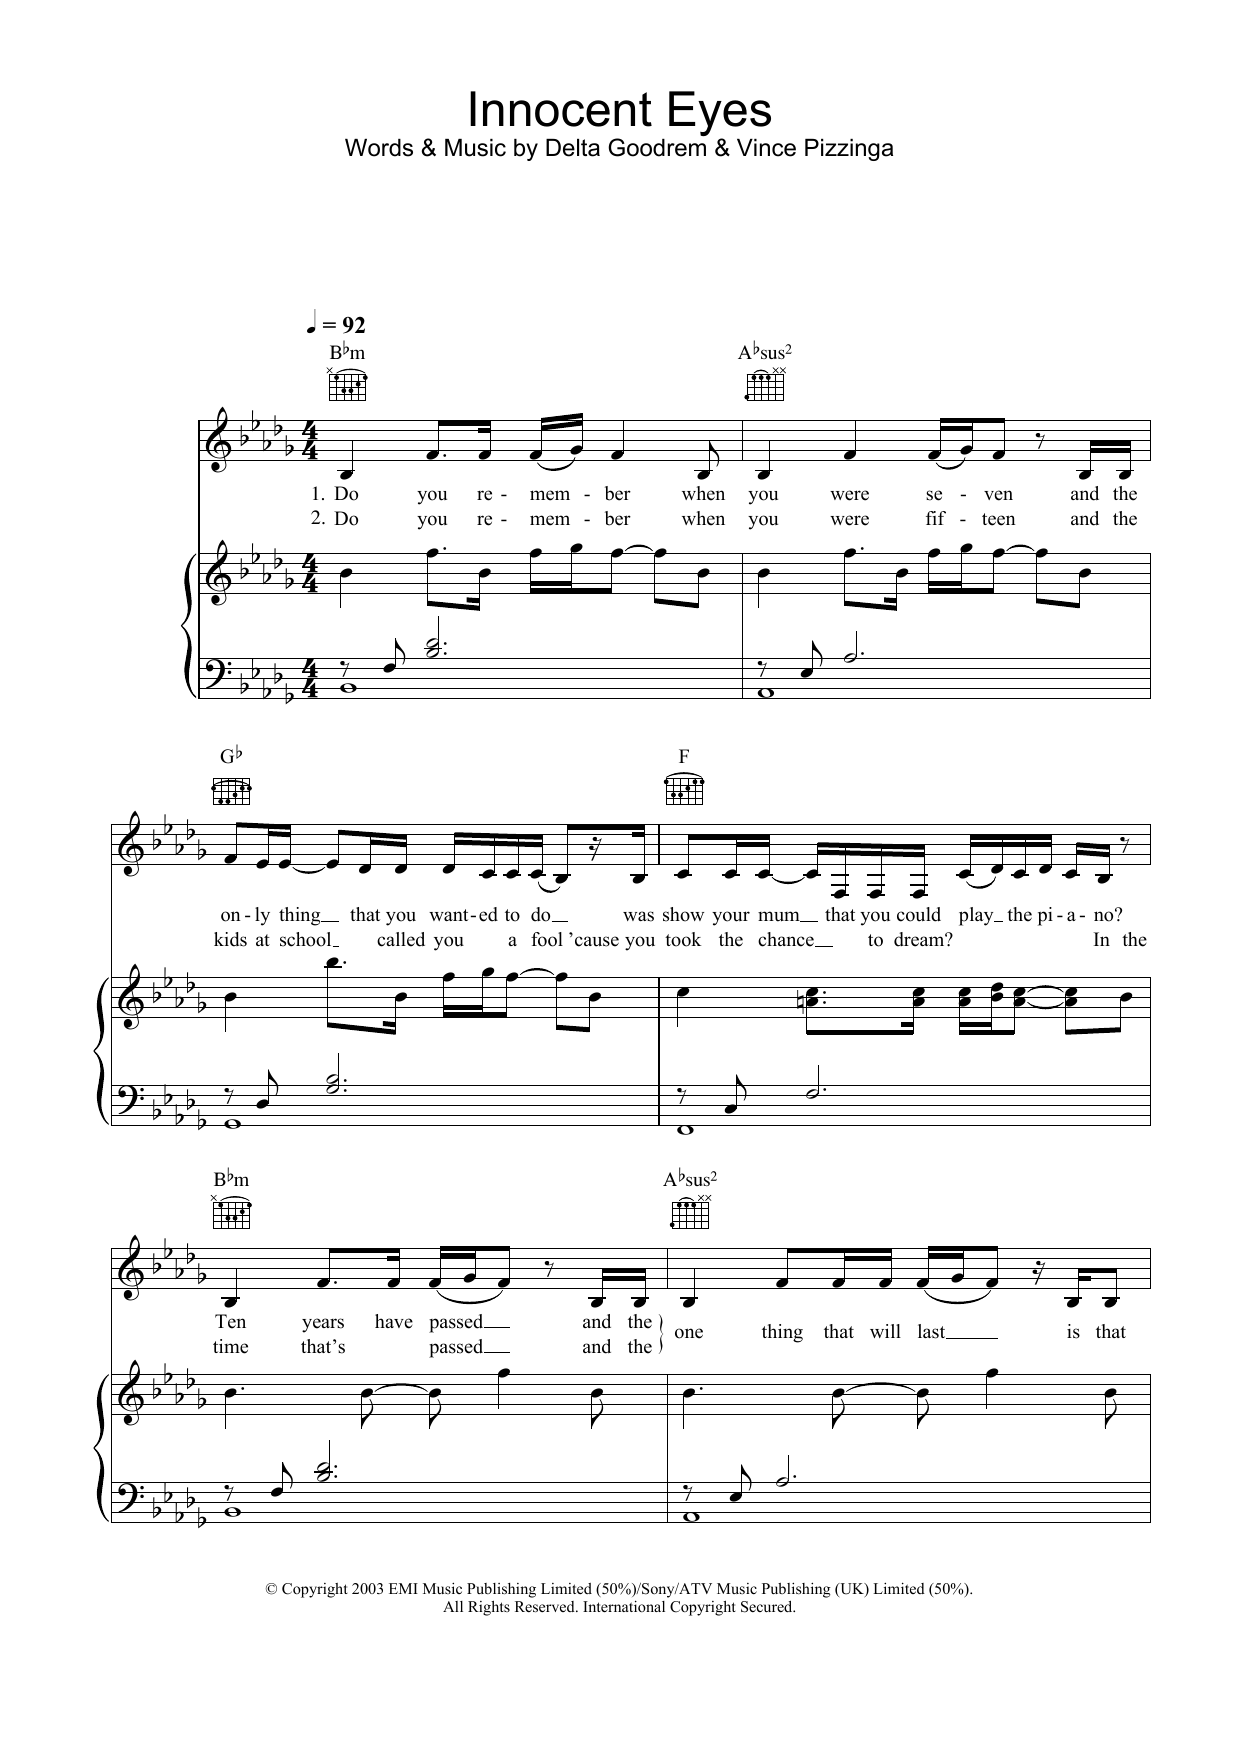 Delta Goodrem Innocent Eyes Sheet Music Notes & Chords for Melody Line, Lyrics & Chords - Download or Print PDF